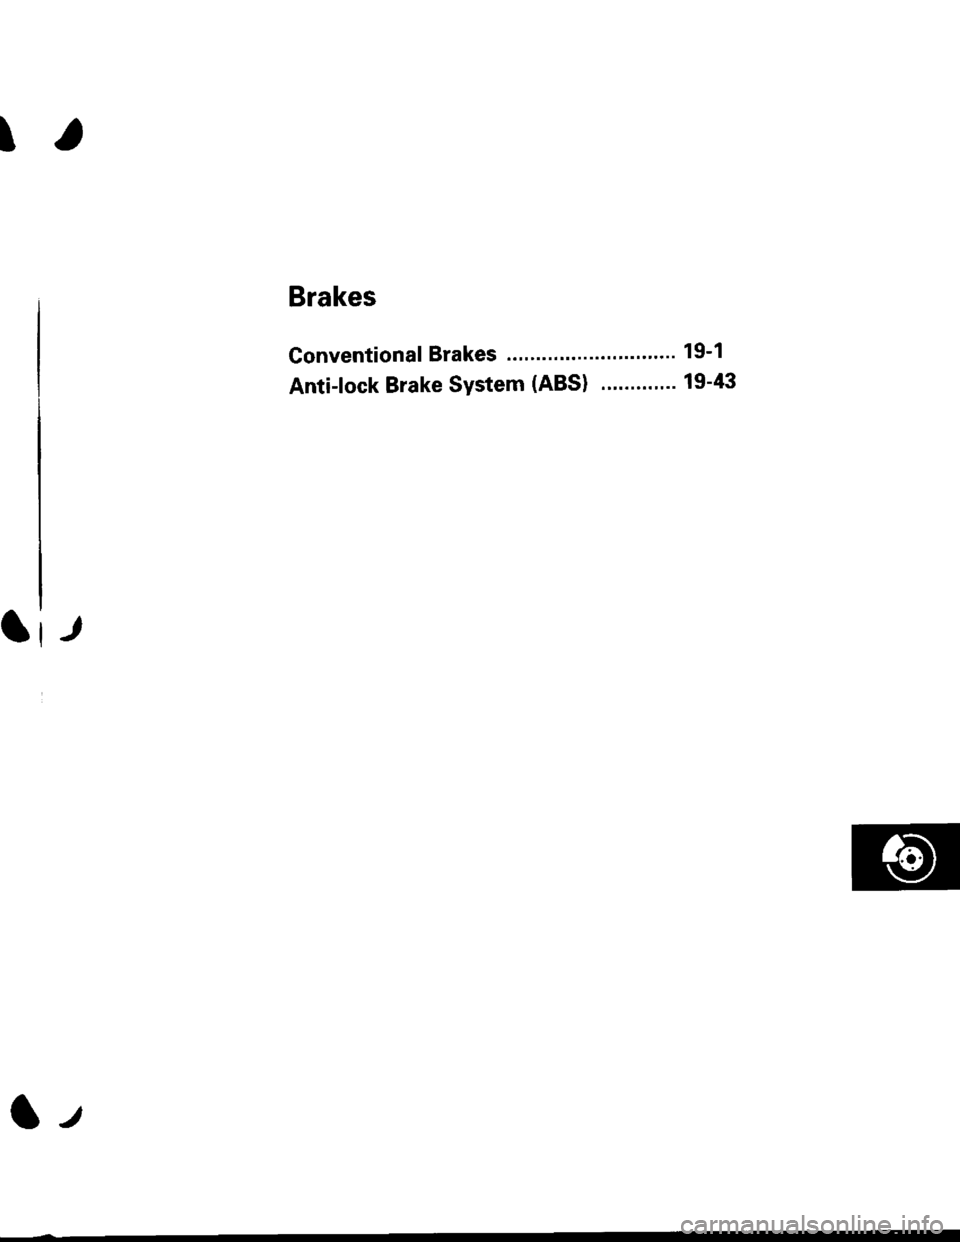 HONDA CIVIC 1999 6.G Workshop Manual t
Brakes
Conventional Brakes ..."... 19-1
Anti-lock Brake System (ABS) ."......".. 19-43
It-,
lt 